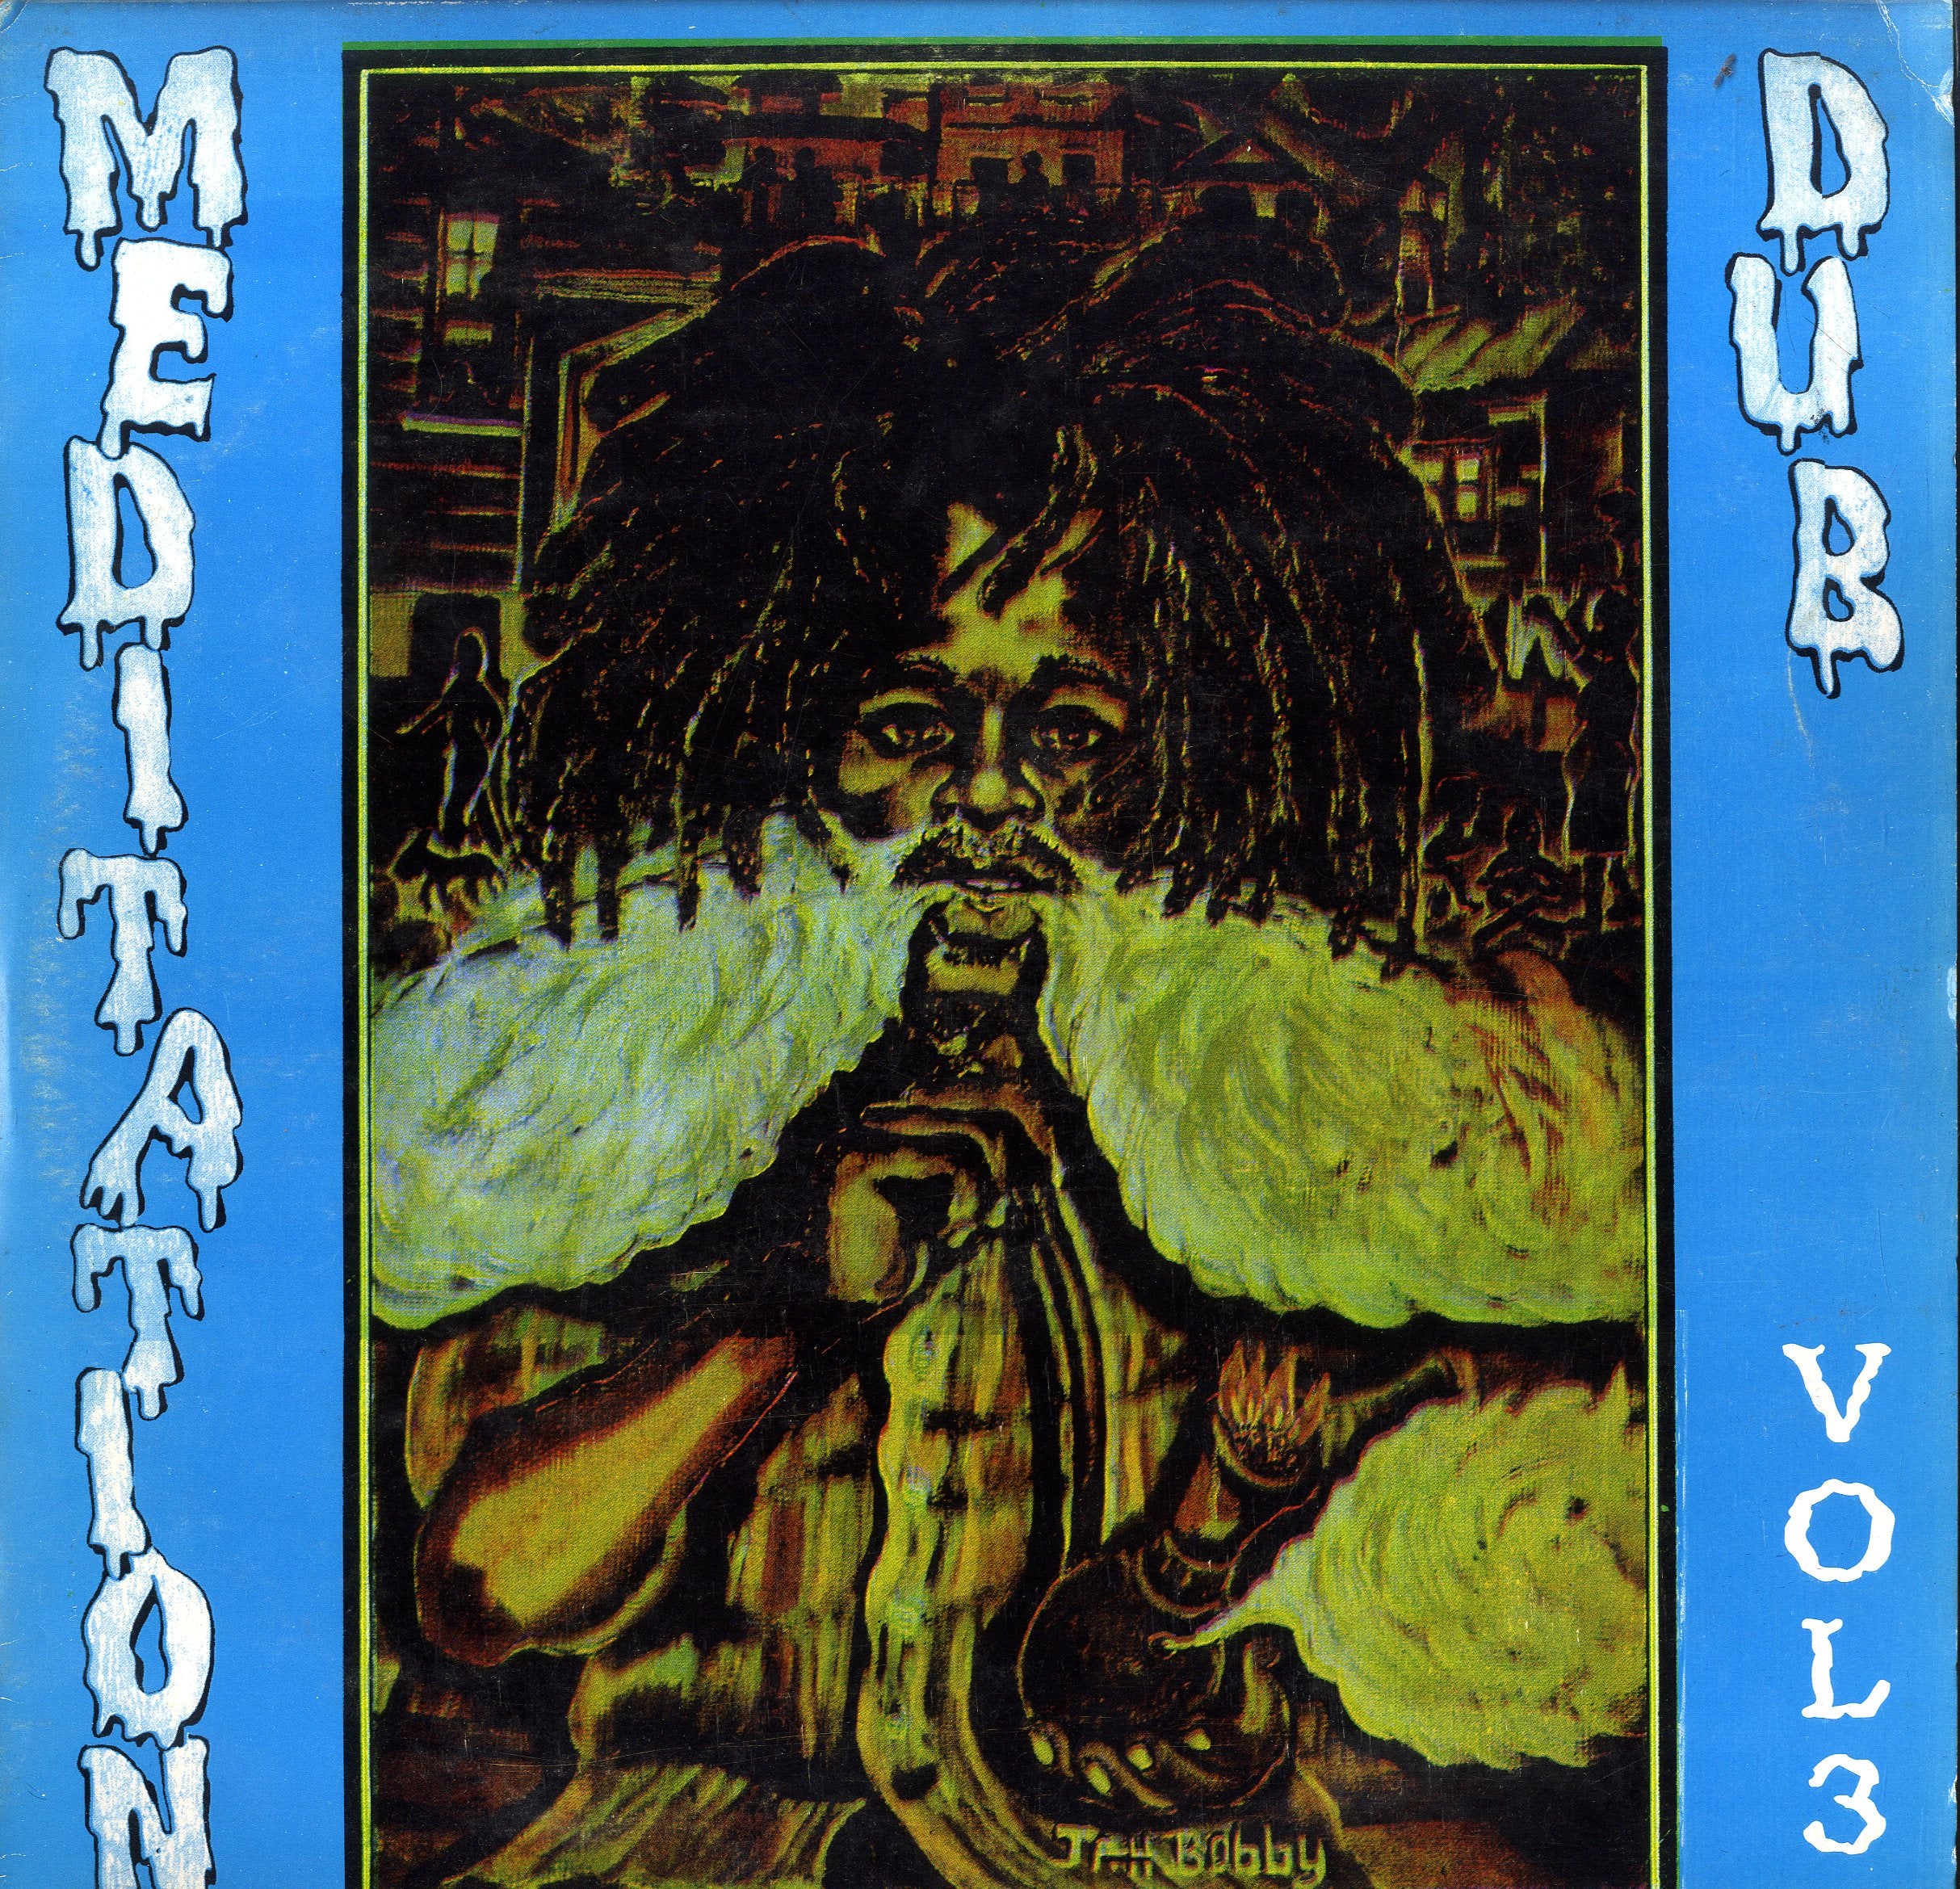 MEDITATION DUB [Meditation Dub Vol. 3]